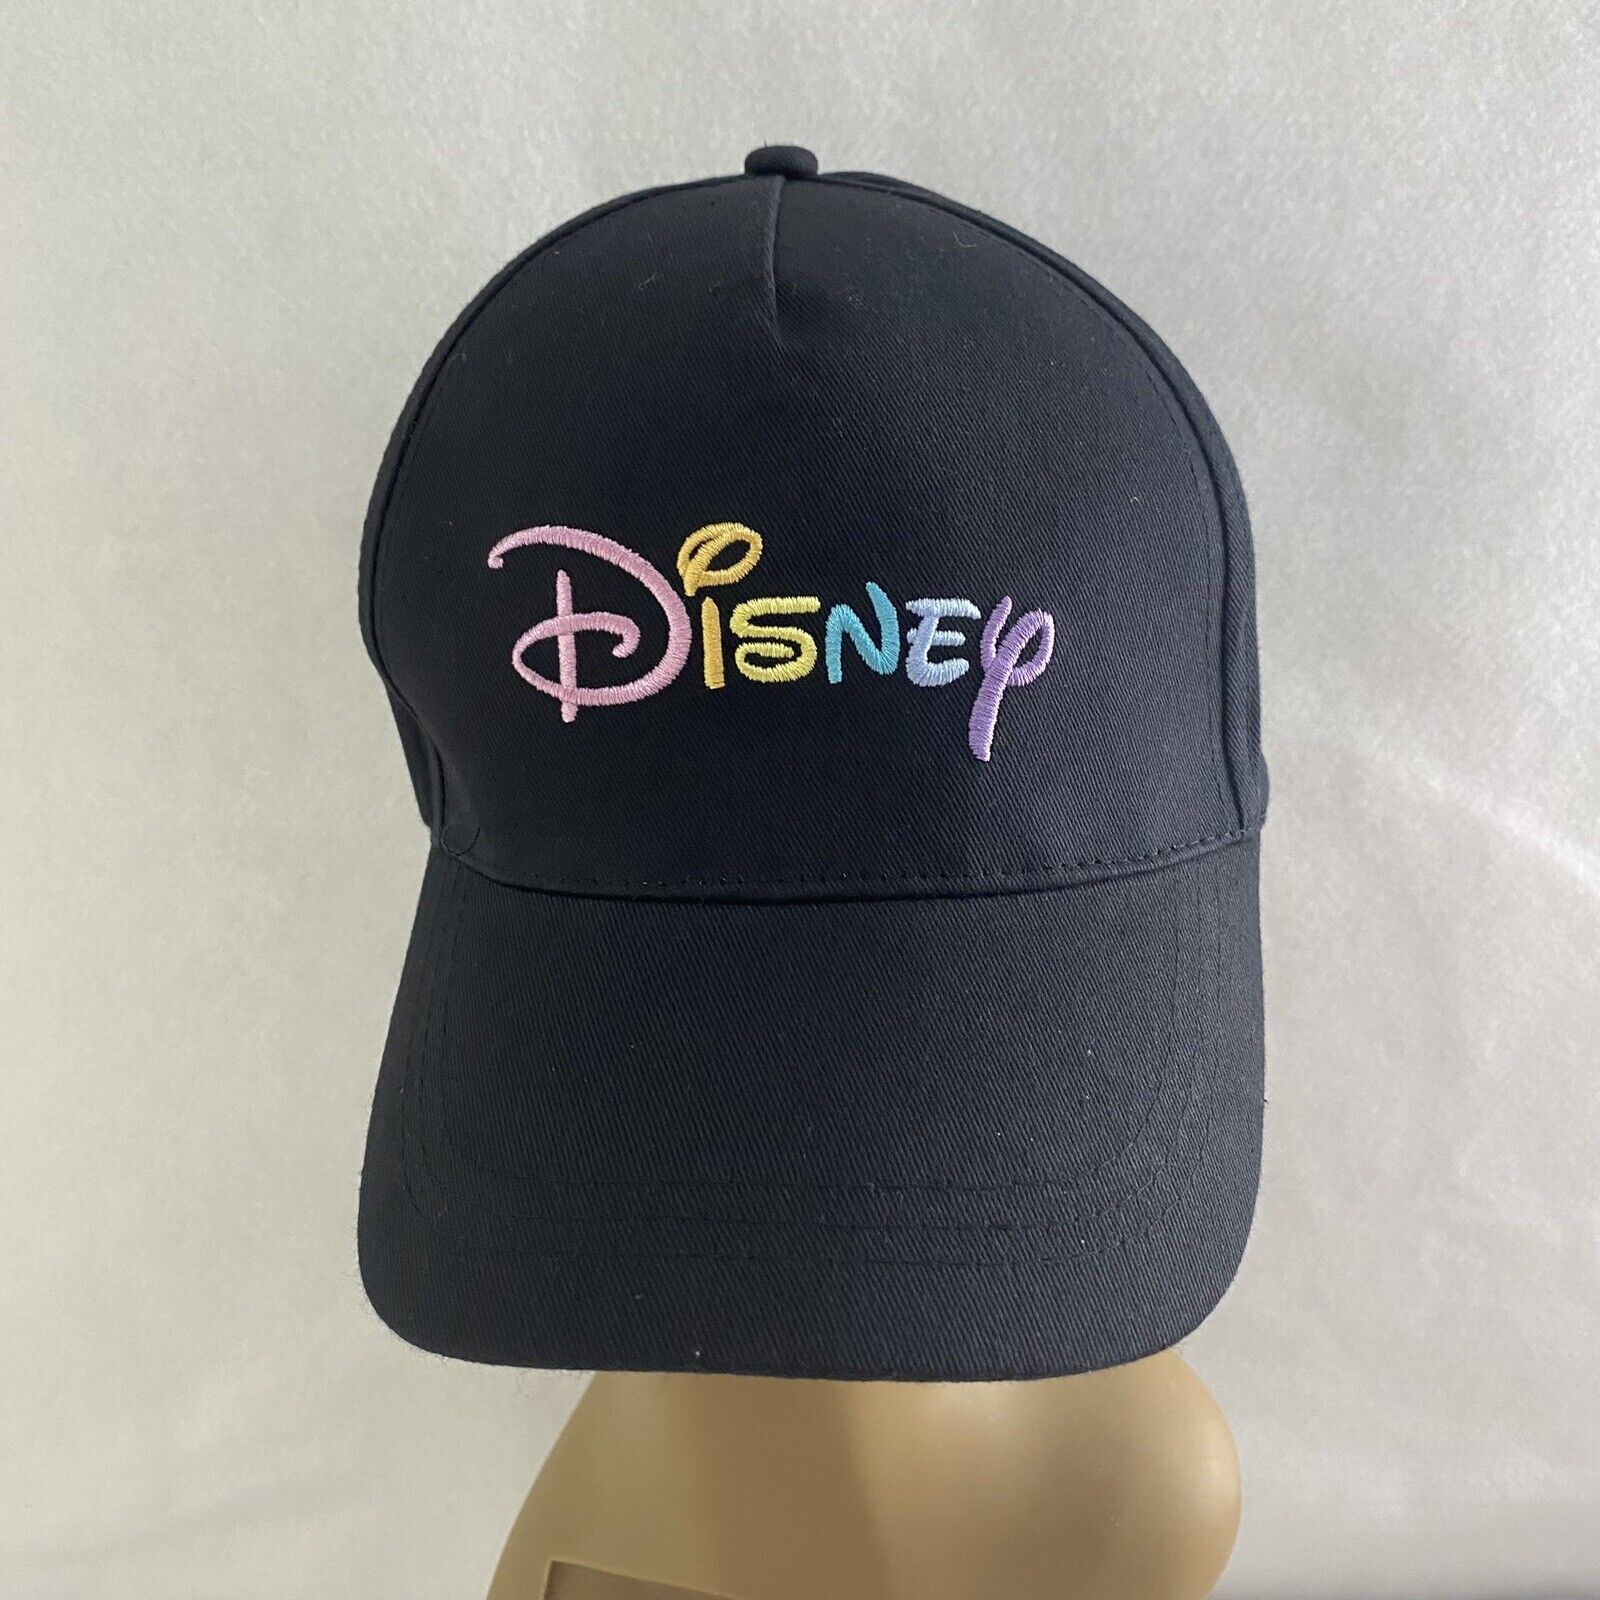 Disney Pastel Rainbow Embroidered on Black Baseball Cap Hat Adjustable Latch